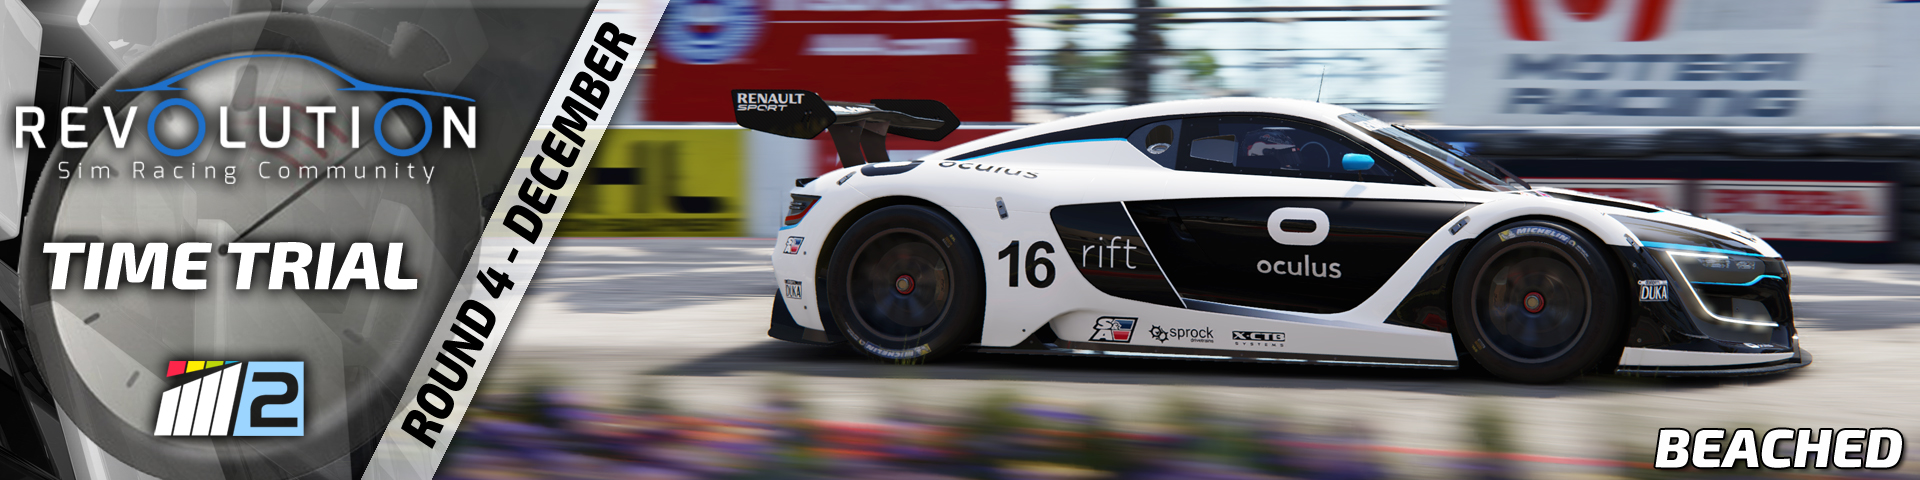 Project CARS bringing realistic Dallara IR-12 to racing simulator